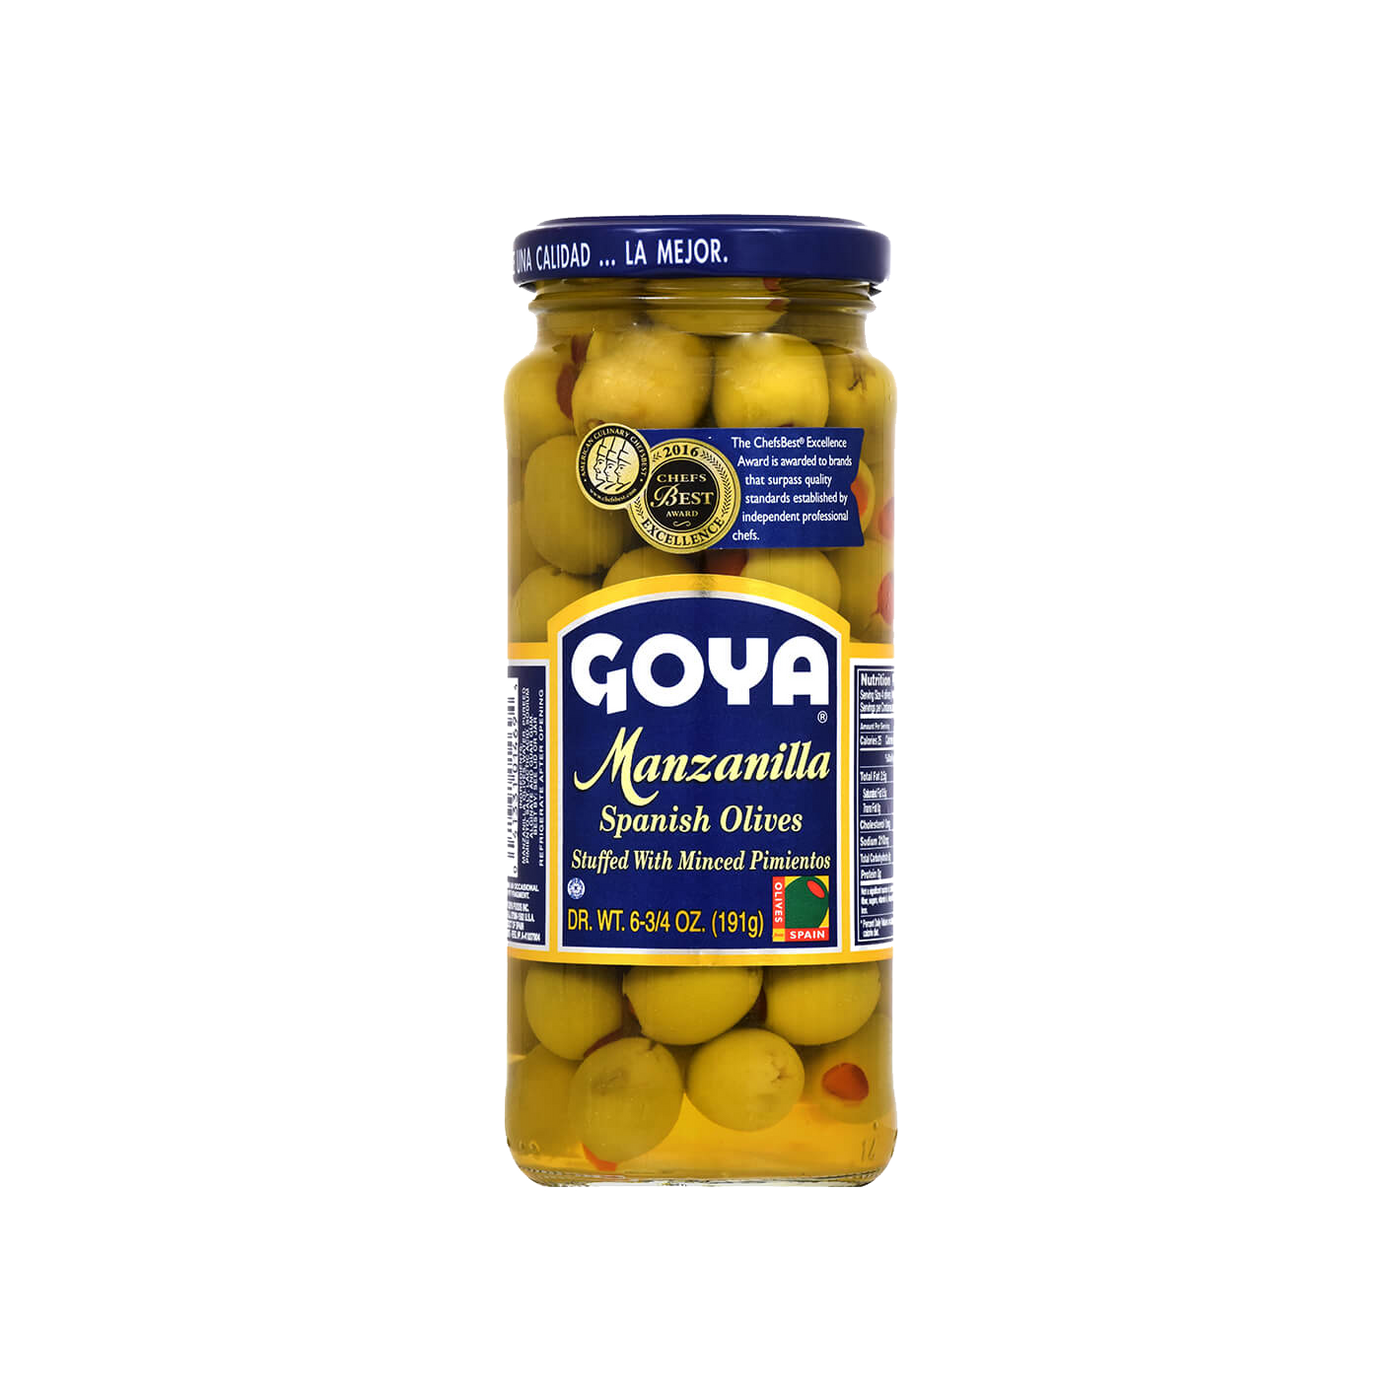   Goya Manzanilla Spanish Olives Stuffed With Minced Pimientos